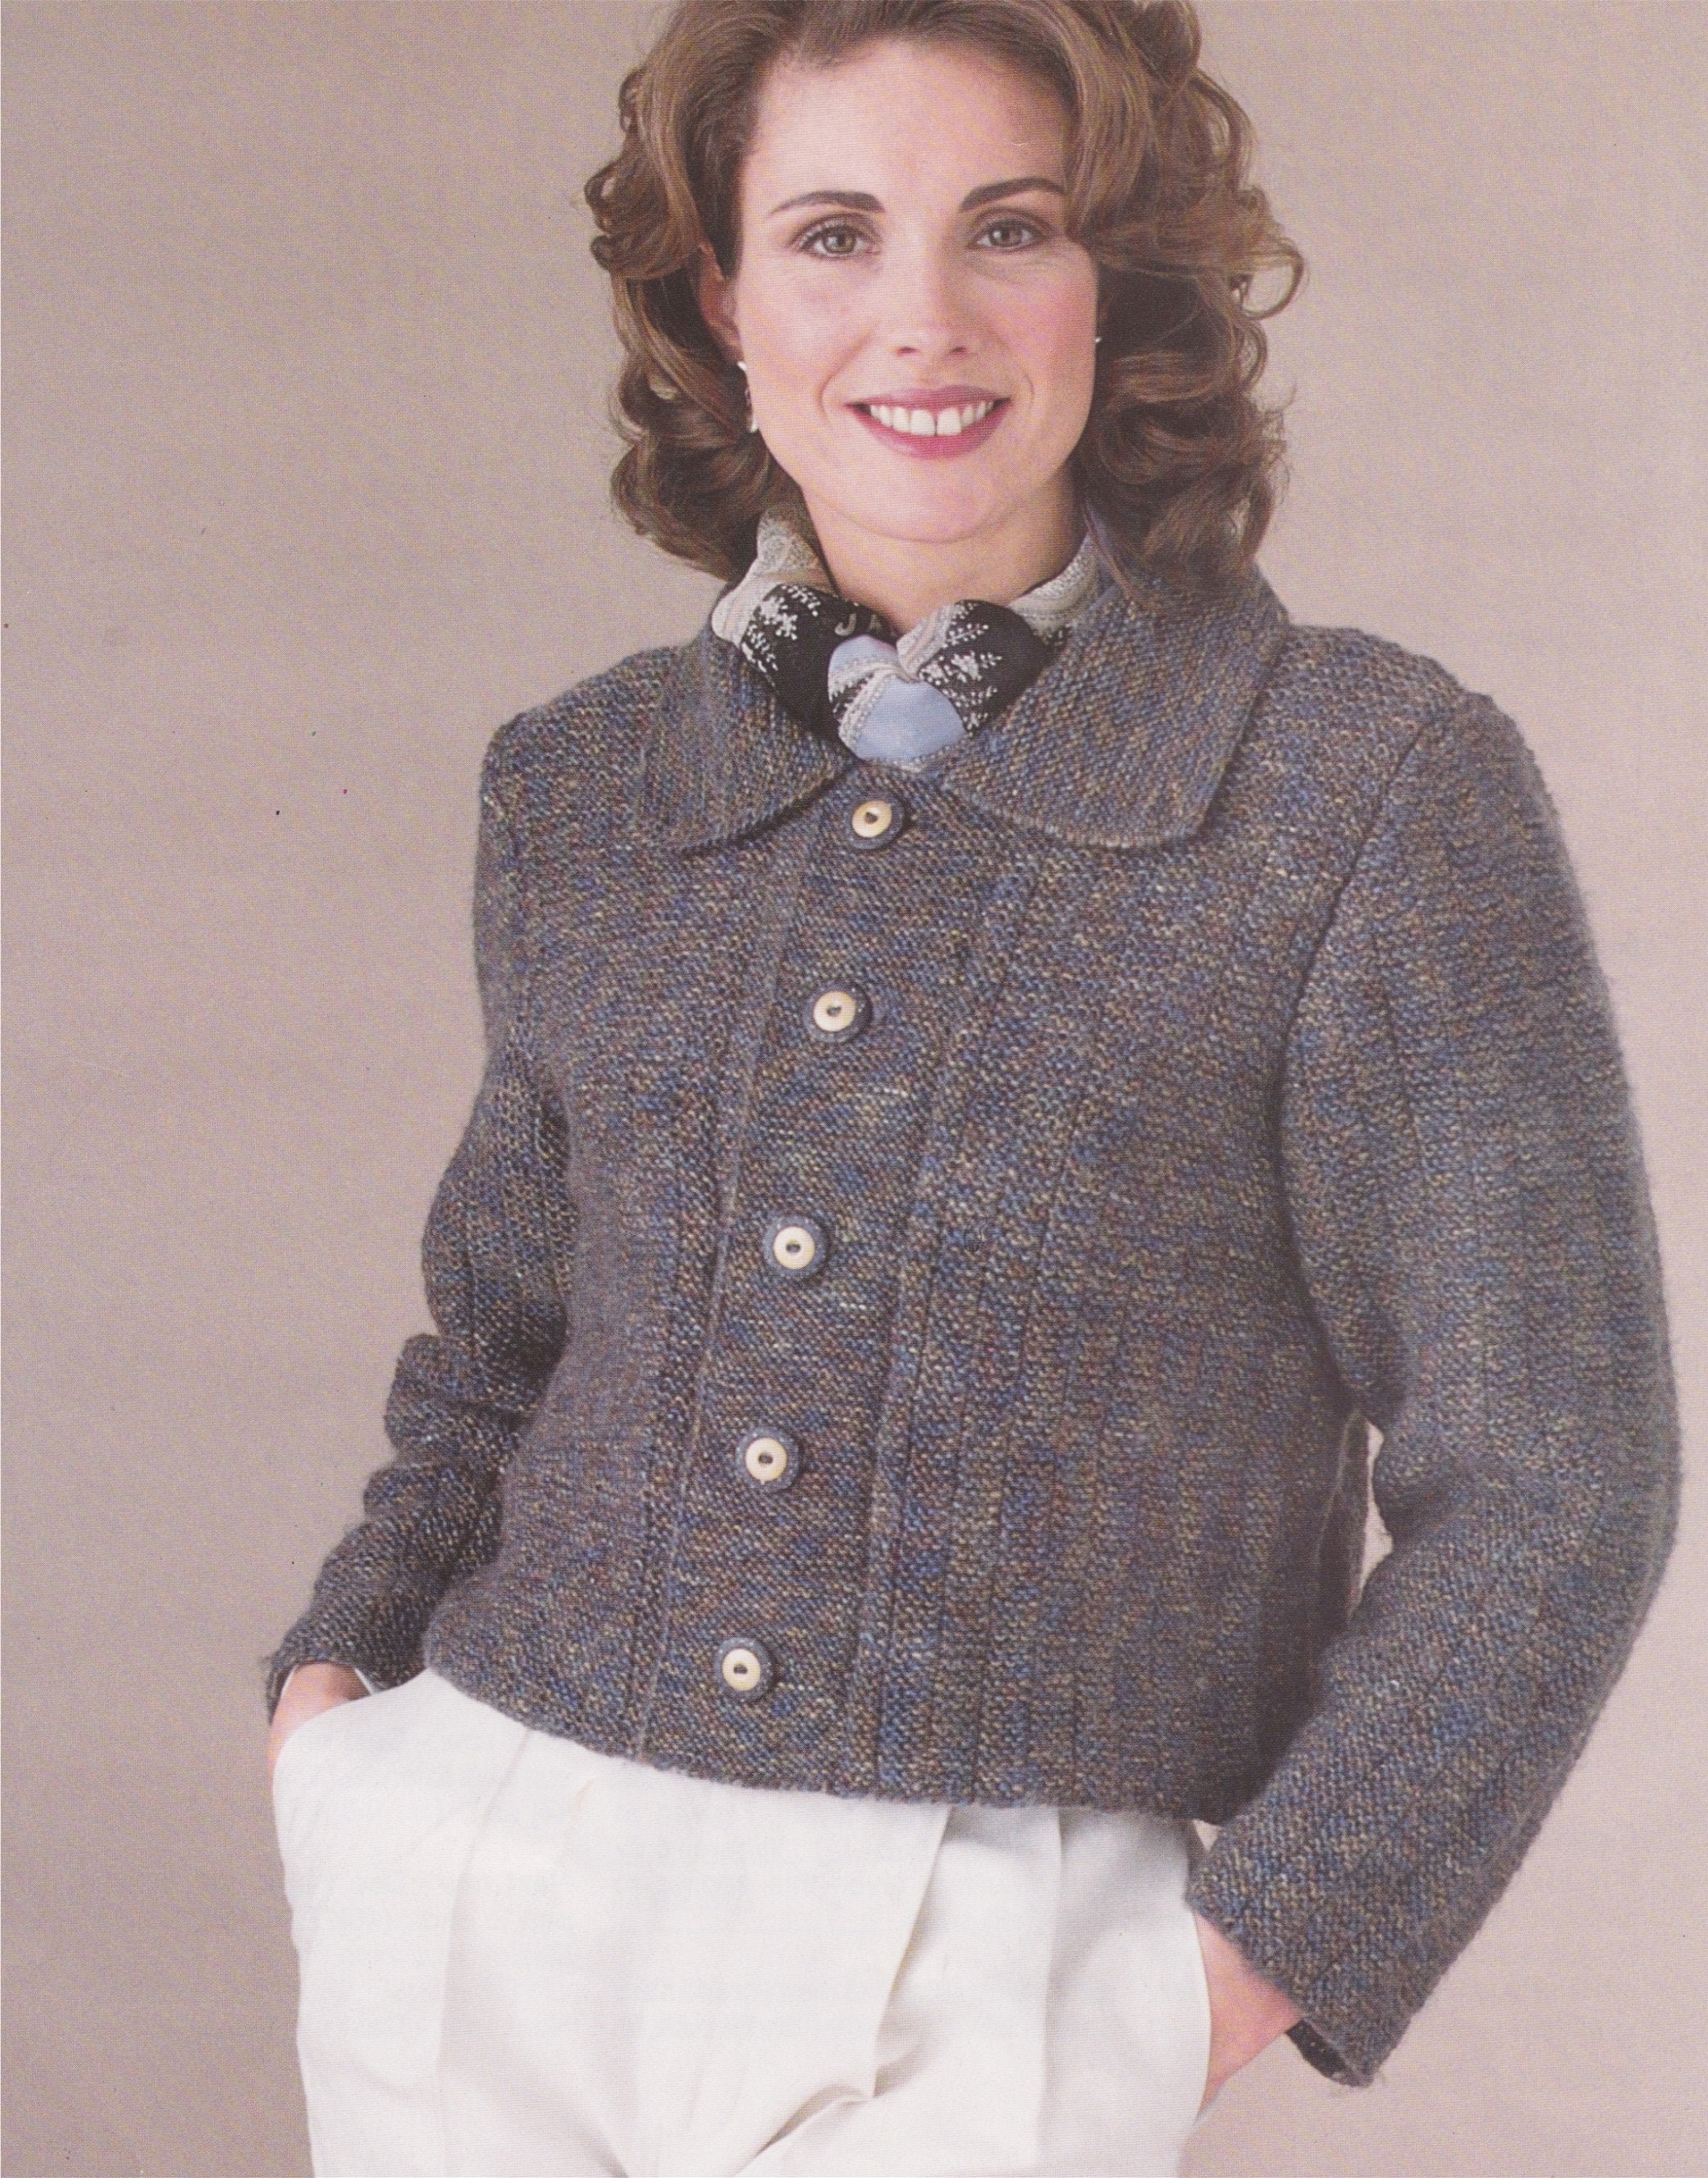 Short Box Style Jacket Knitting Pattern PDF 32, 34, 36, 38, 40 and 42 inch bust, Plus Size, DK 8 ply Yarn, Vintage Knit Patterns